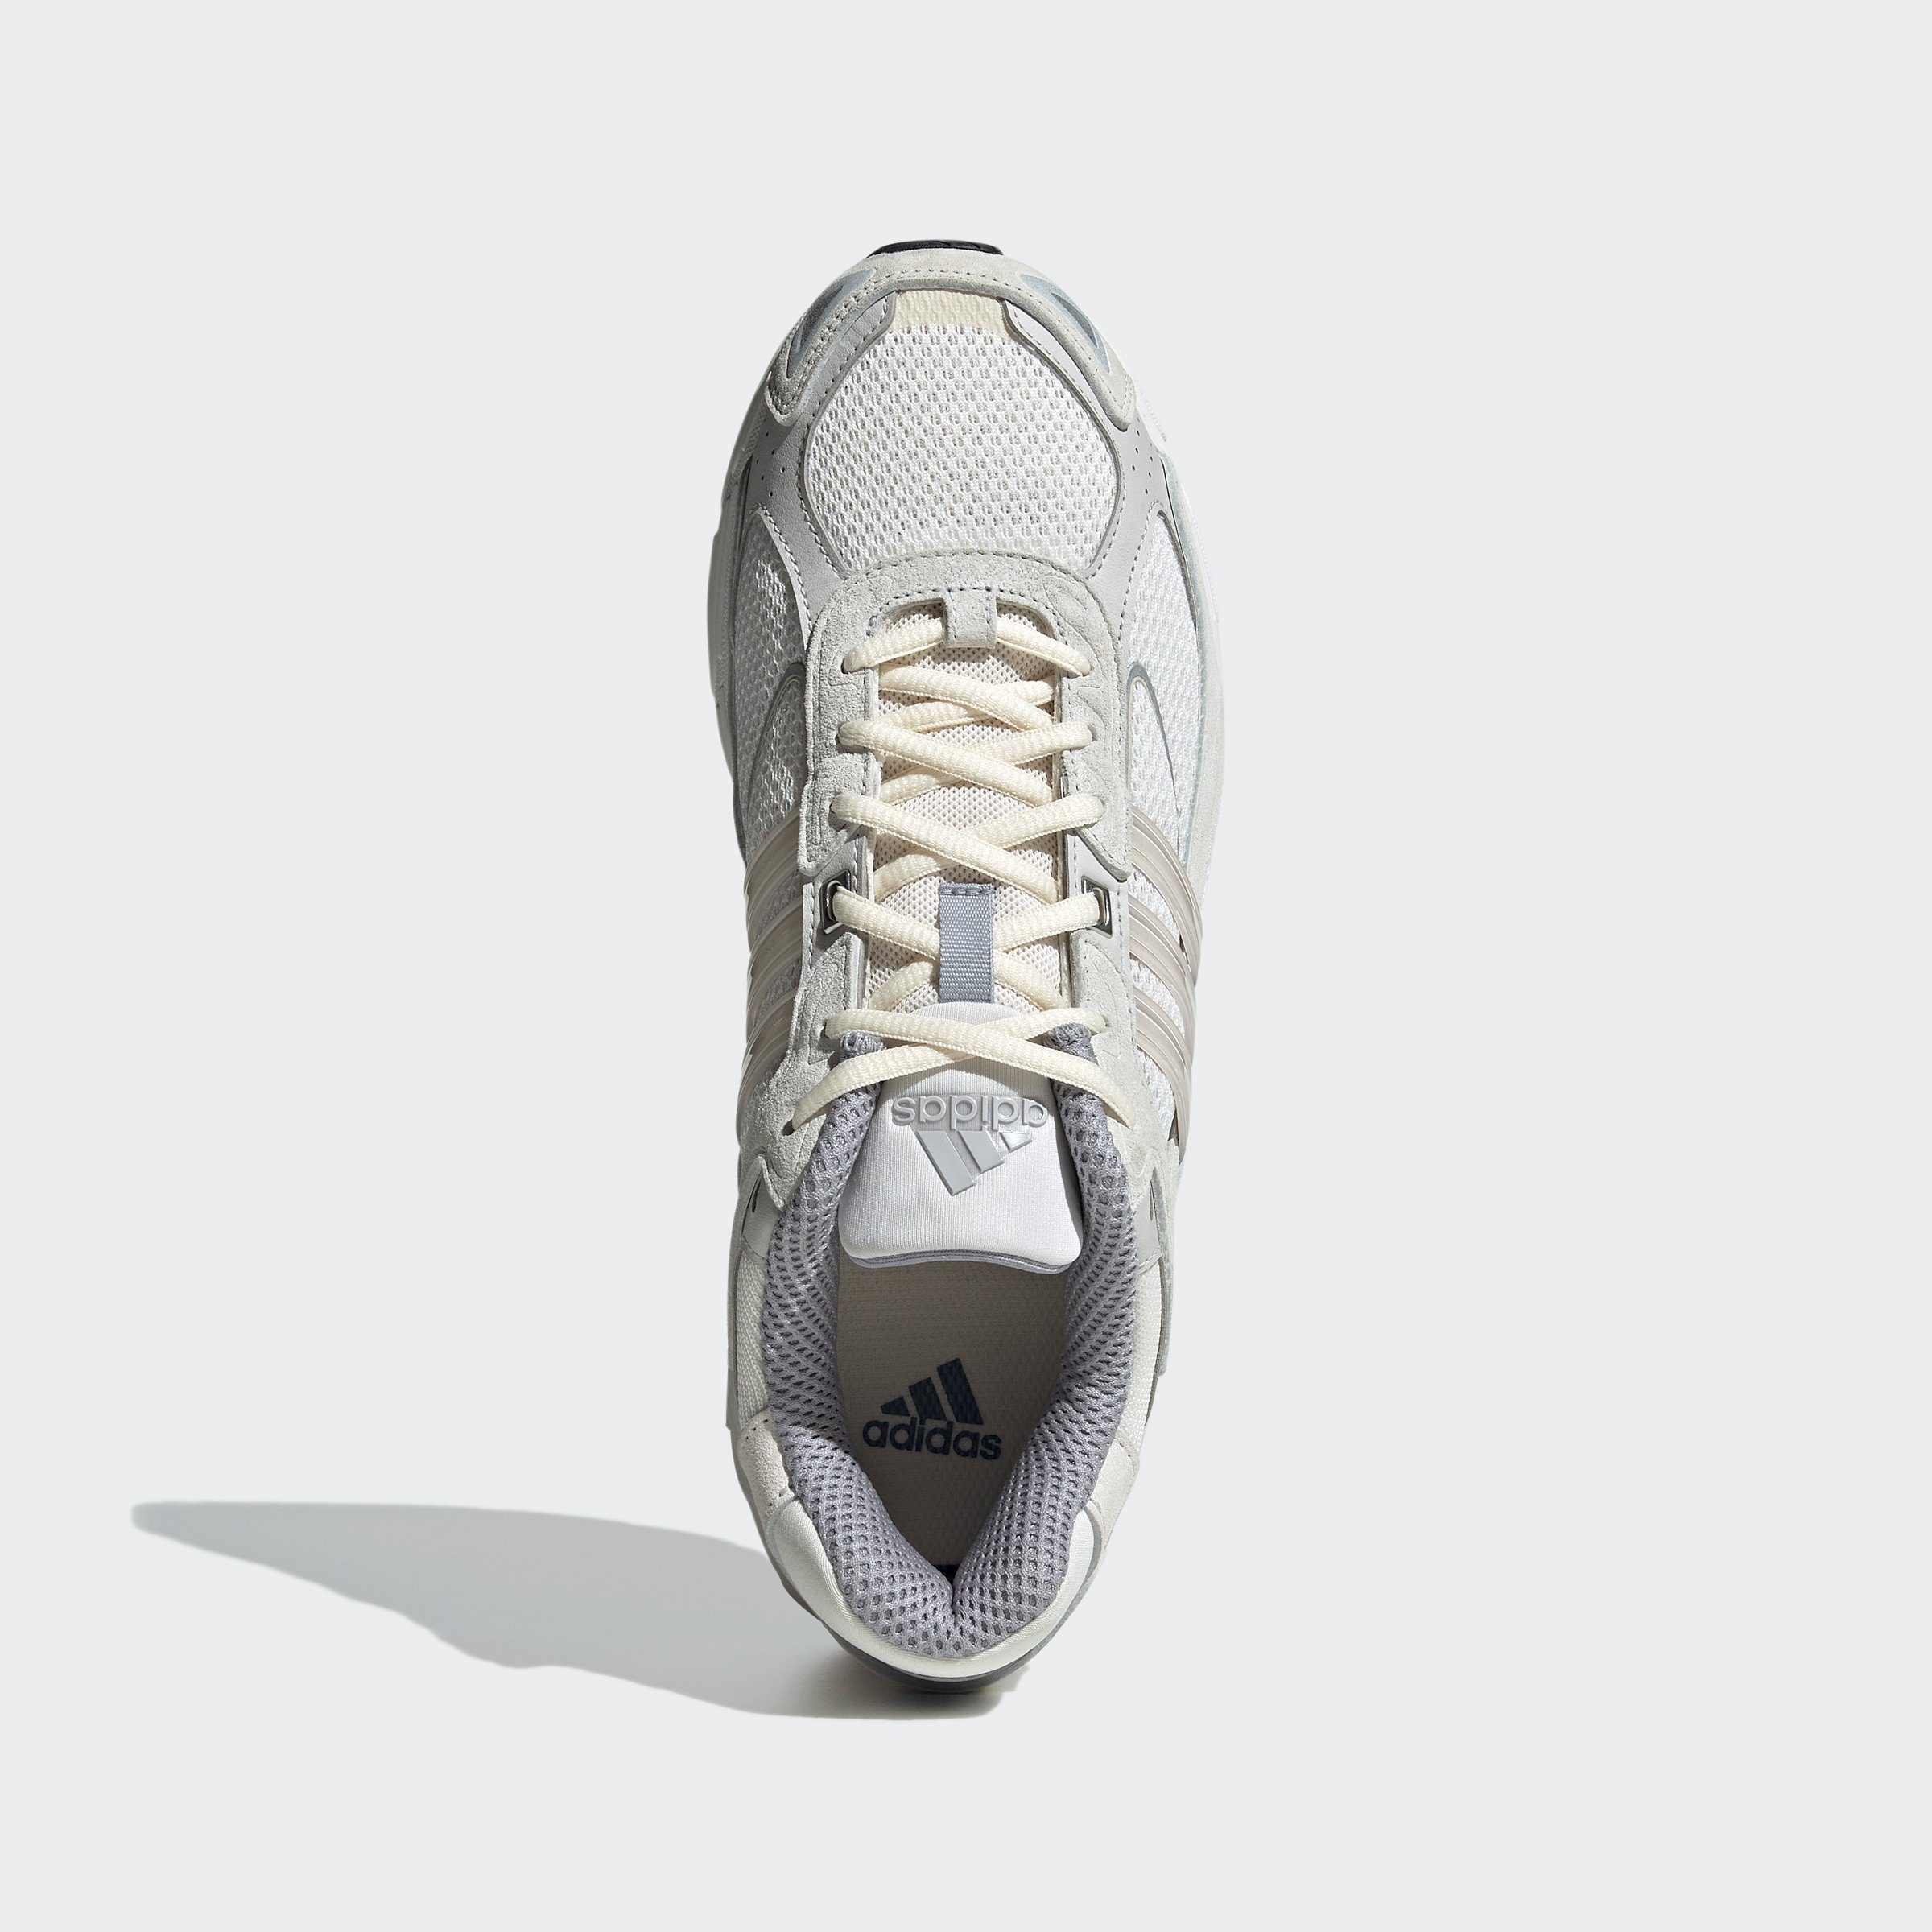 / Wonder Originals White RESPONSE White / CL White Crystal adidas Crystal Sneaker